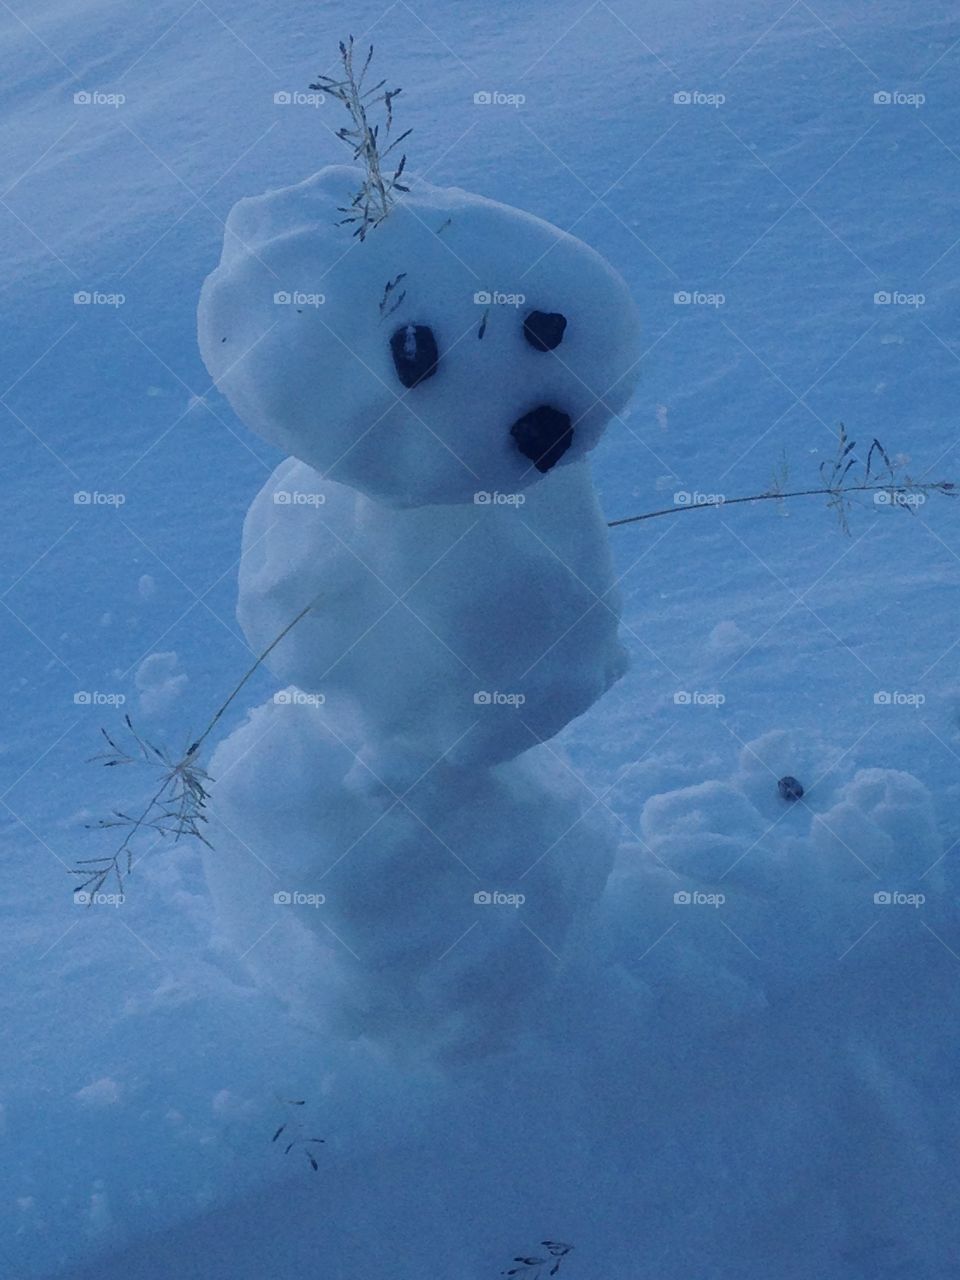 The mini snowman